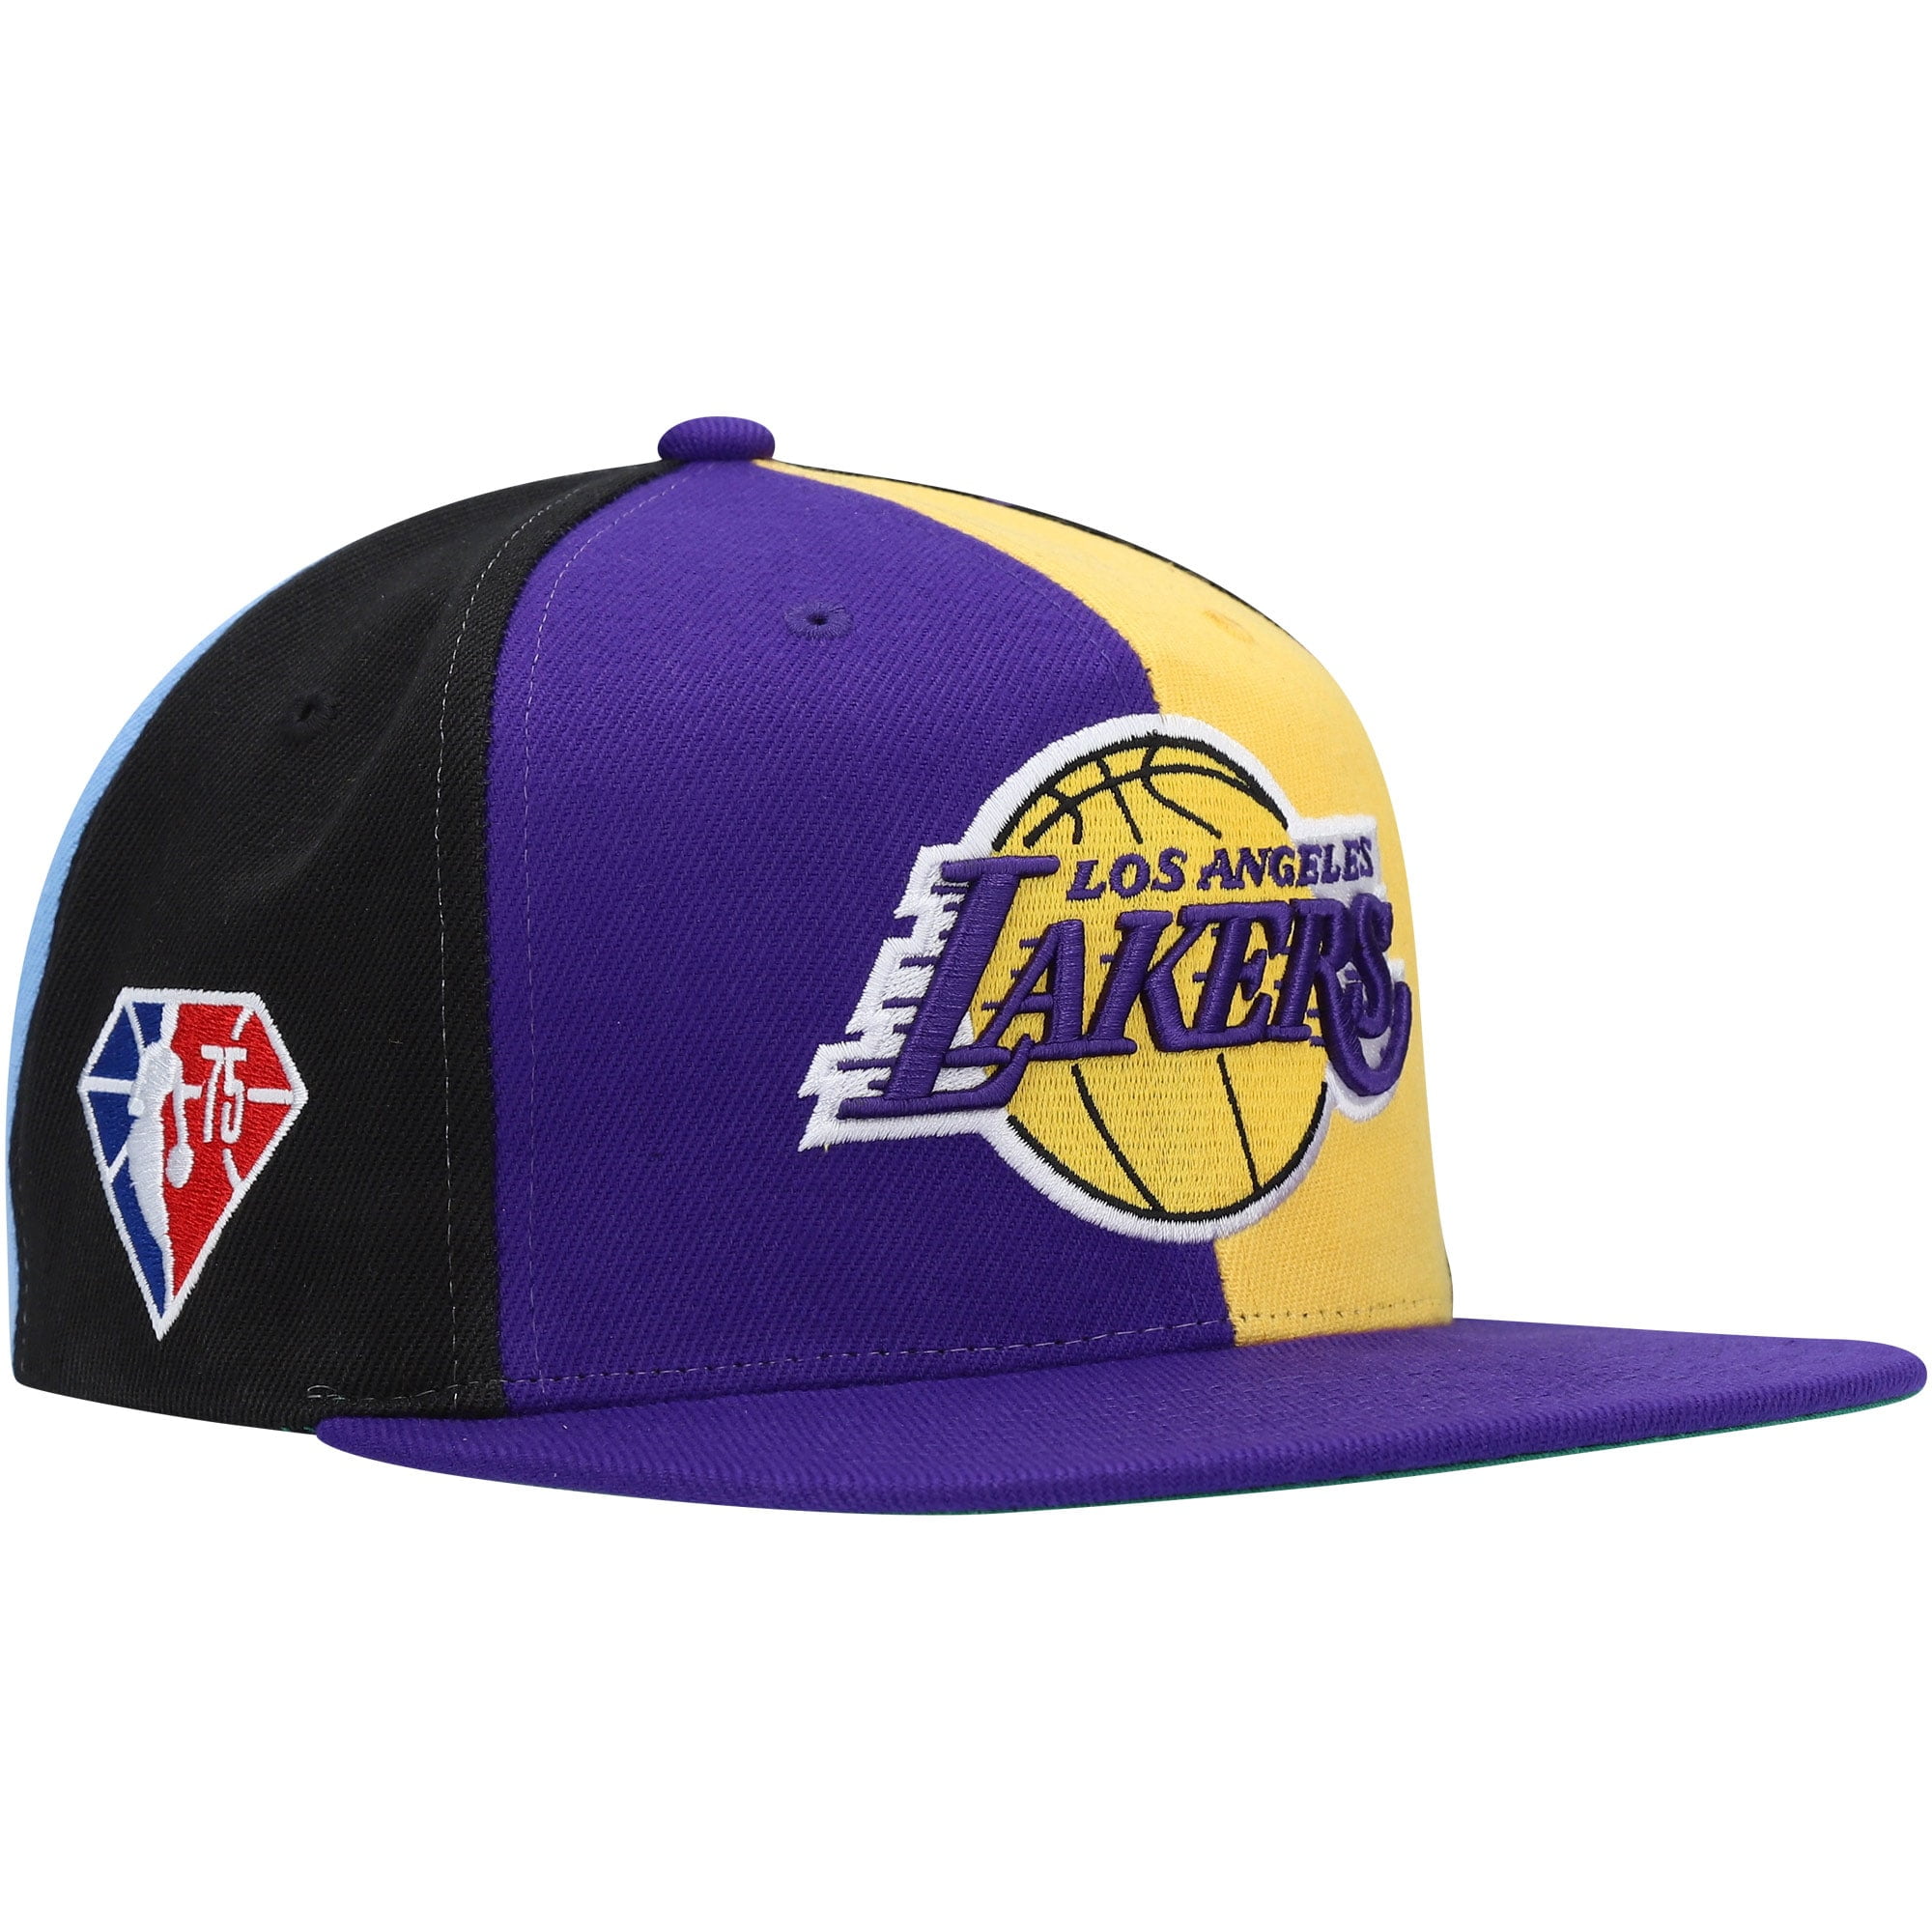 NBA Men's Caps - Purple